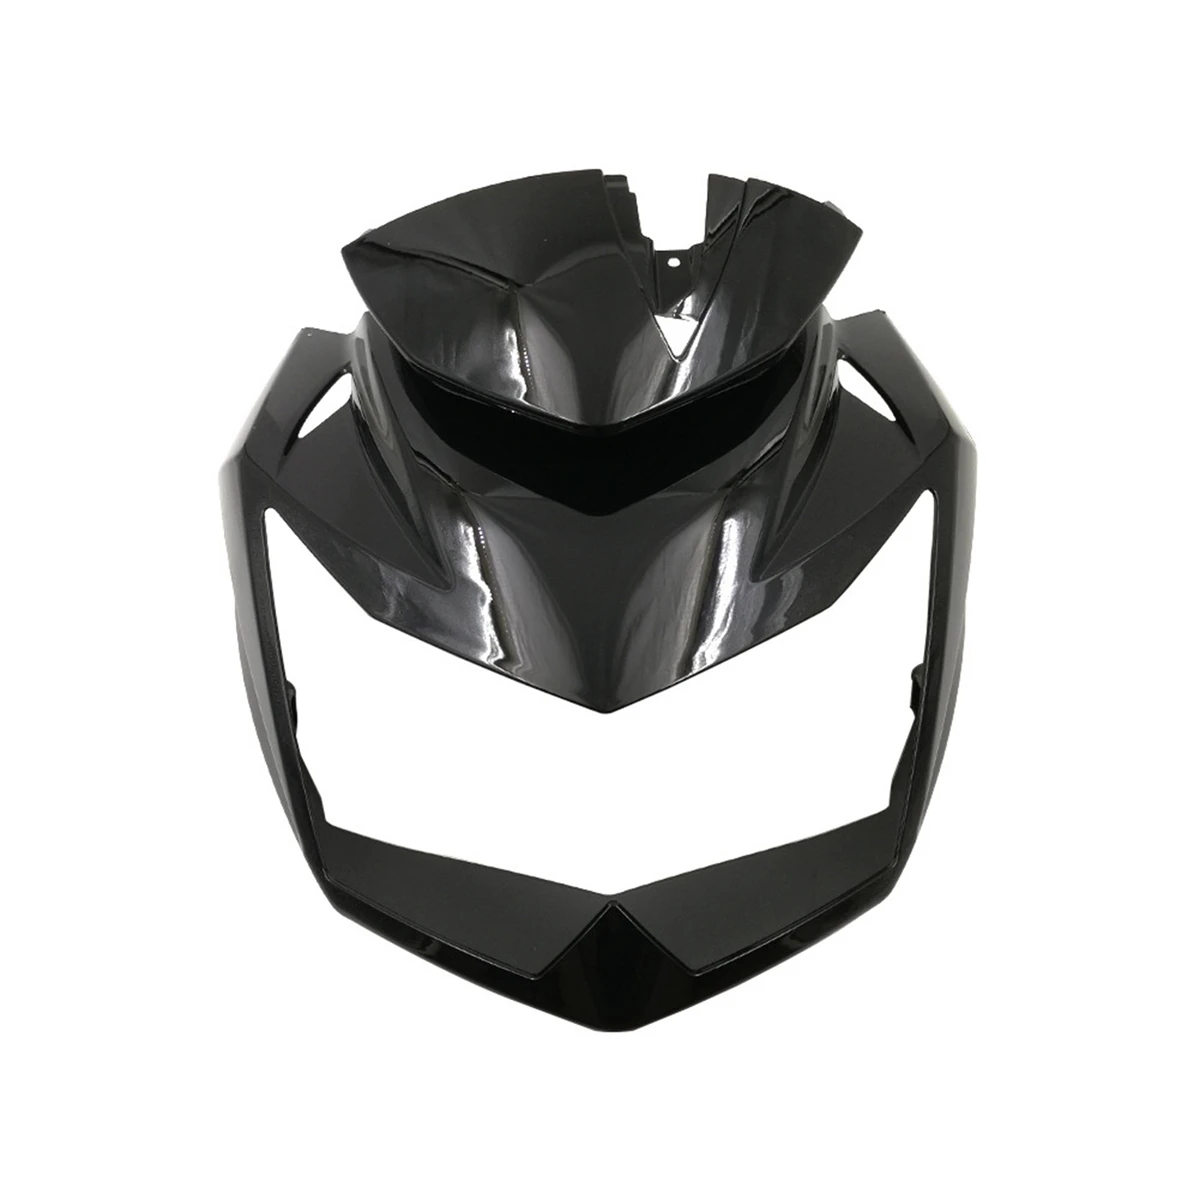 

Black Motorcycle Upper Front Head Neck Headlight Cover Fairing Cowl Nose for Kawasaki Z-750 Z750 2007-2012